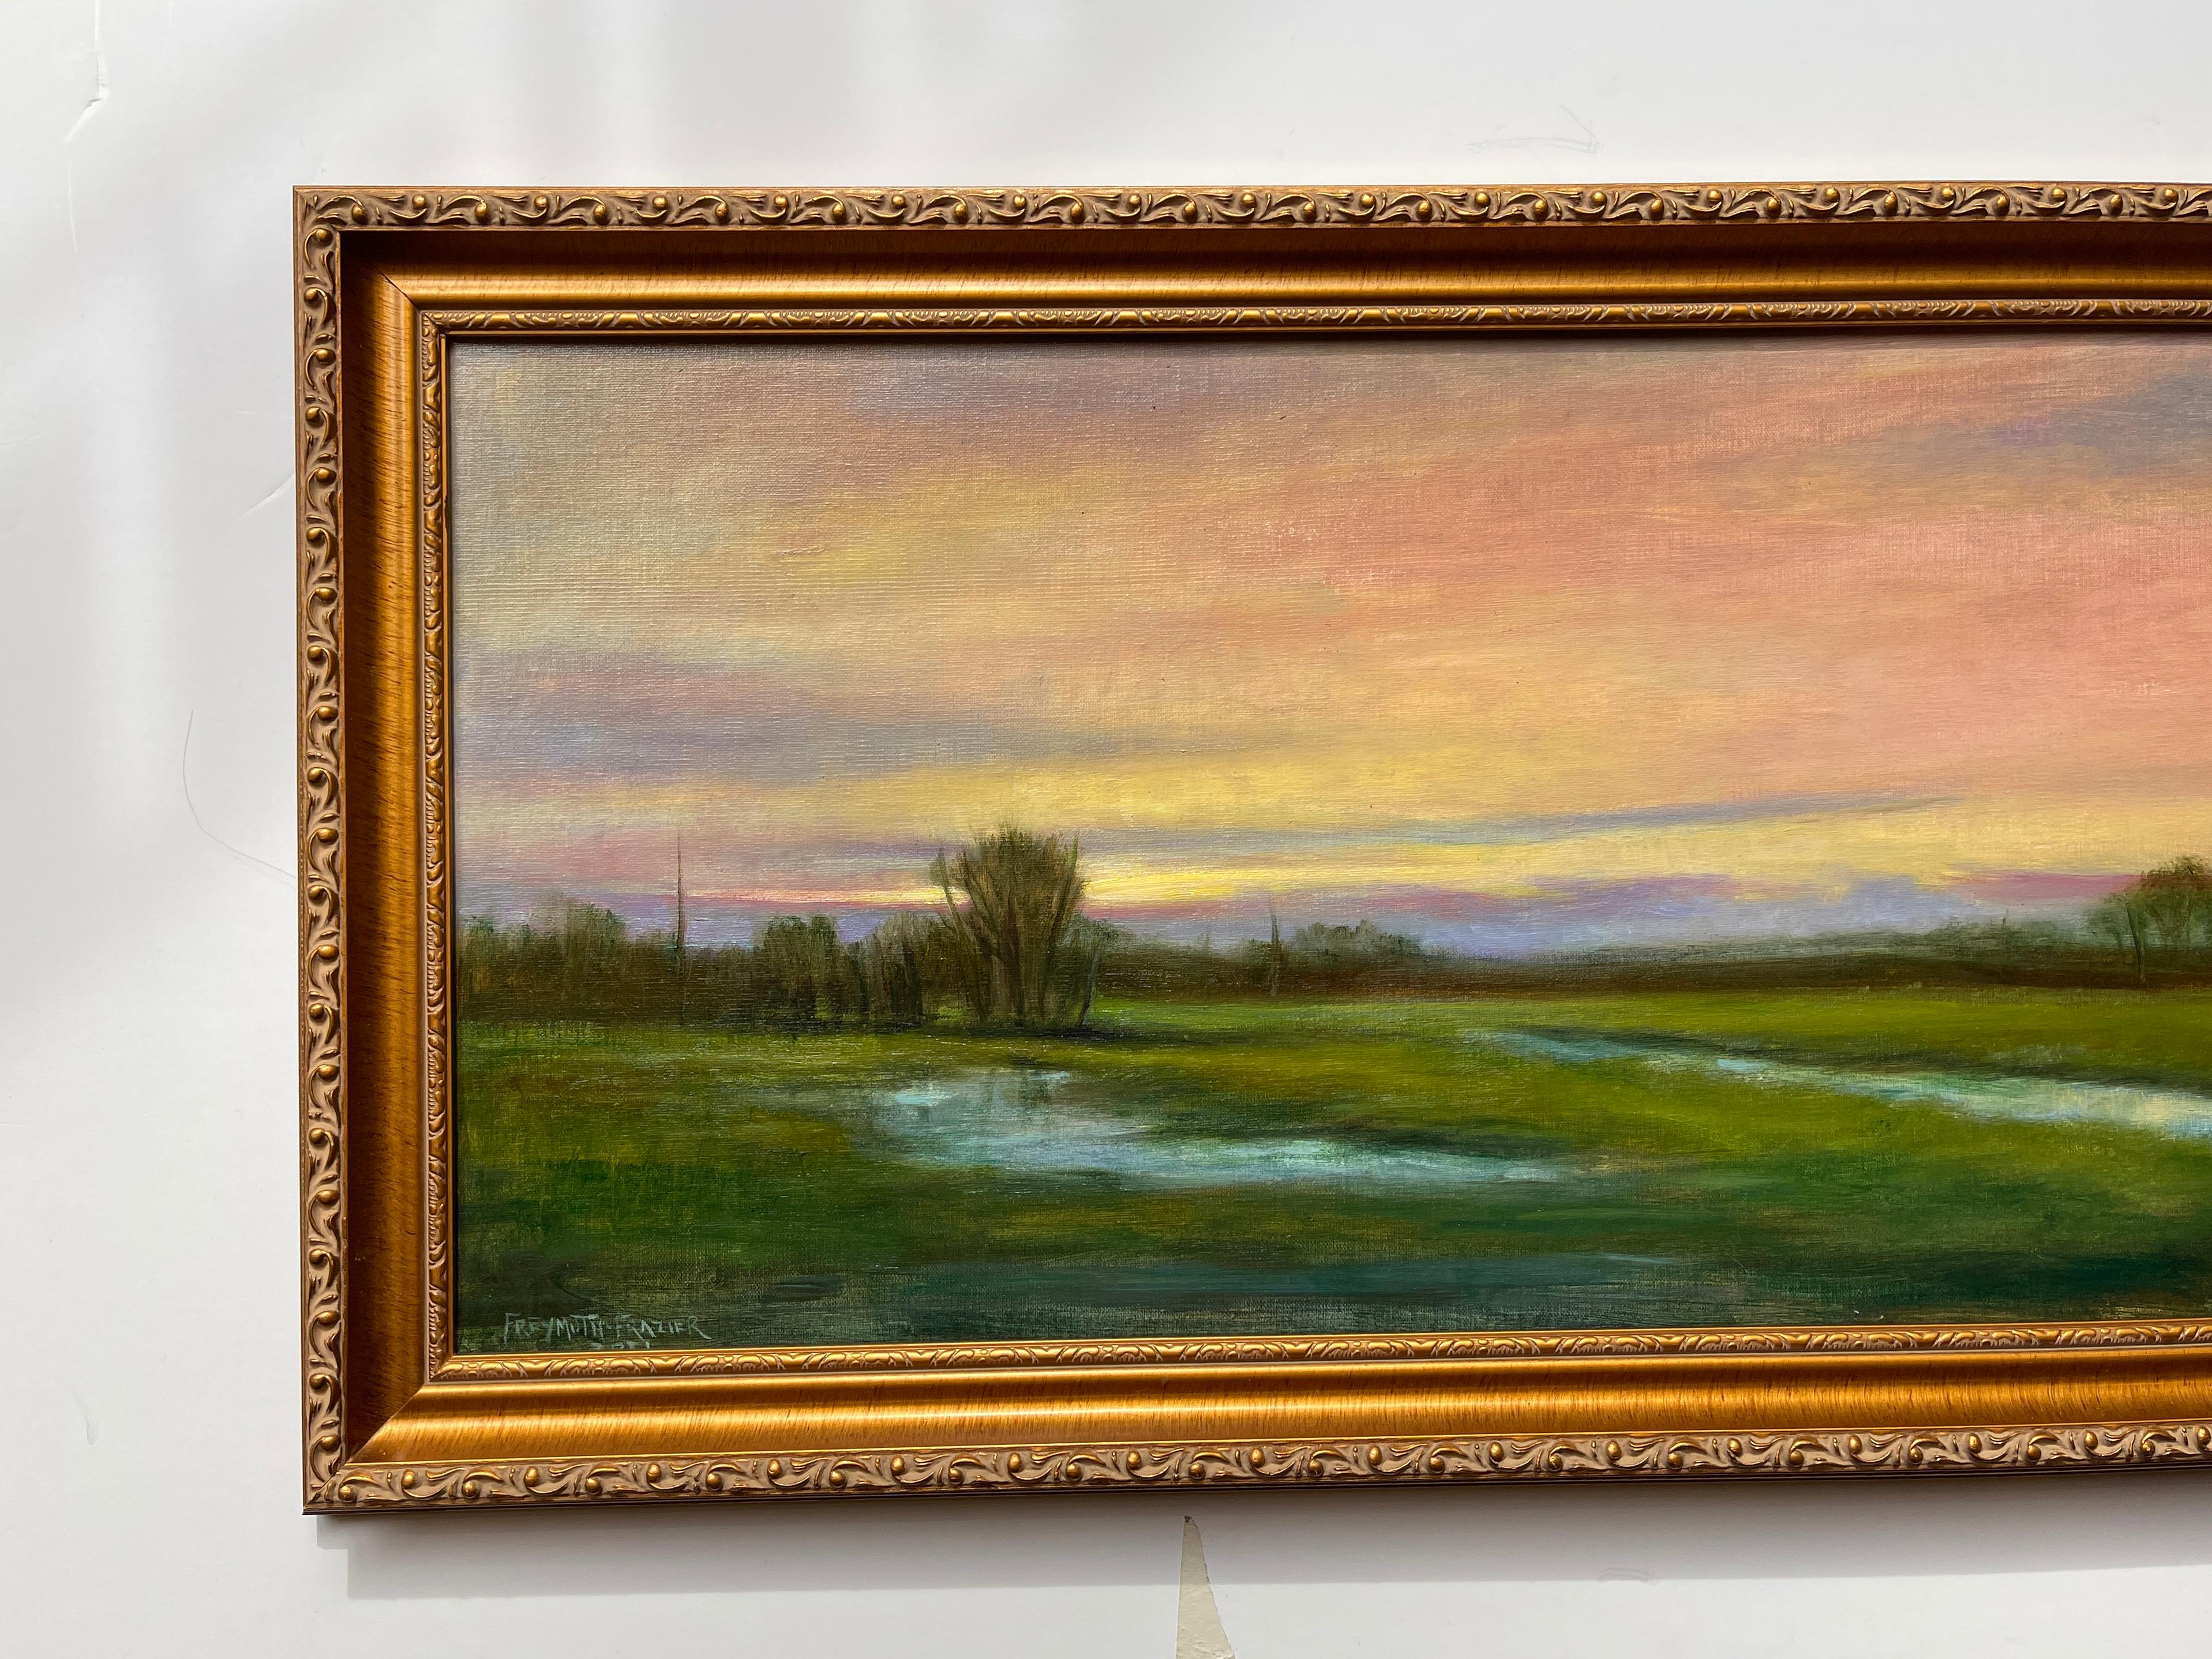 Paint Wetlands, Reflective Marsh on a Spring Sky, Soft Romantic Colors, Original Oil